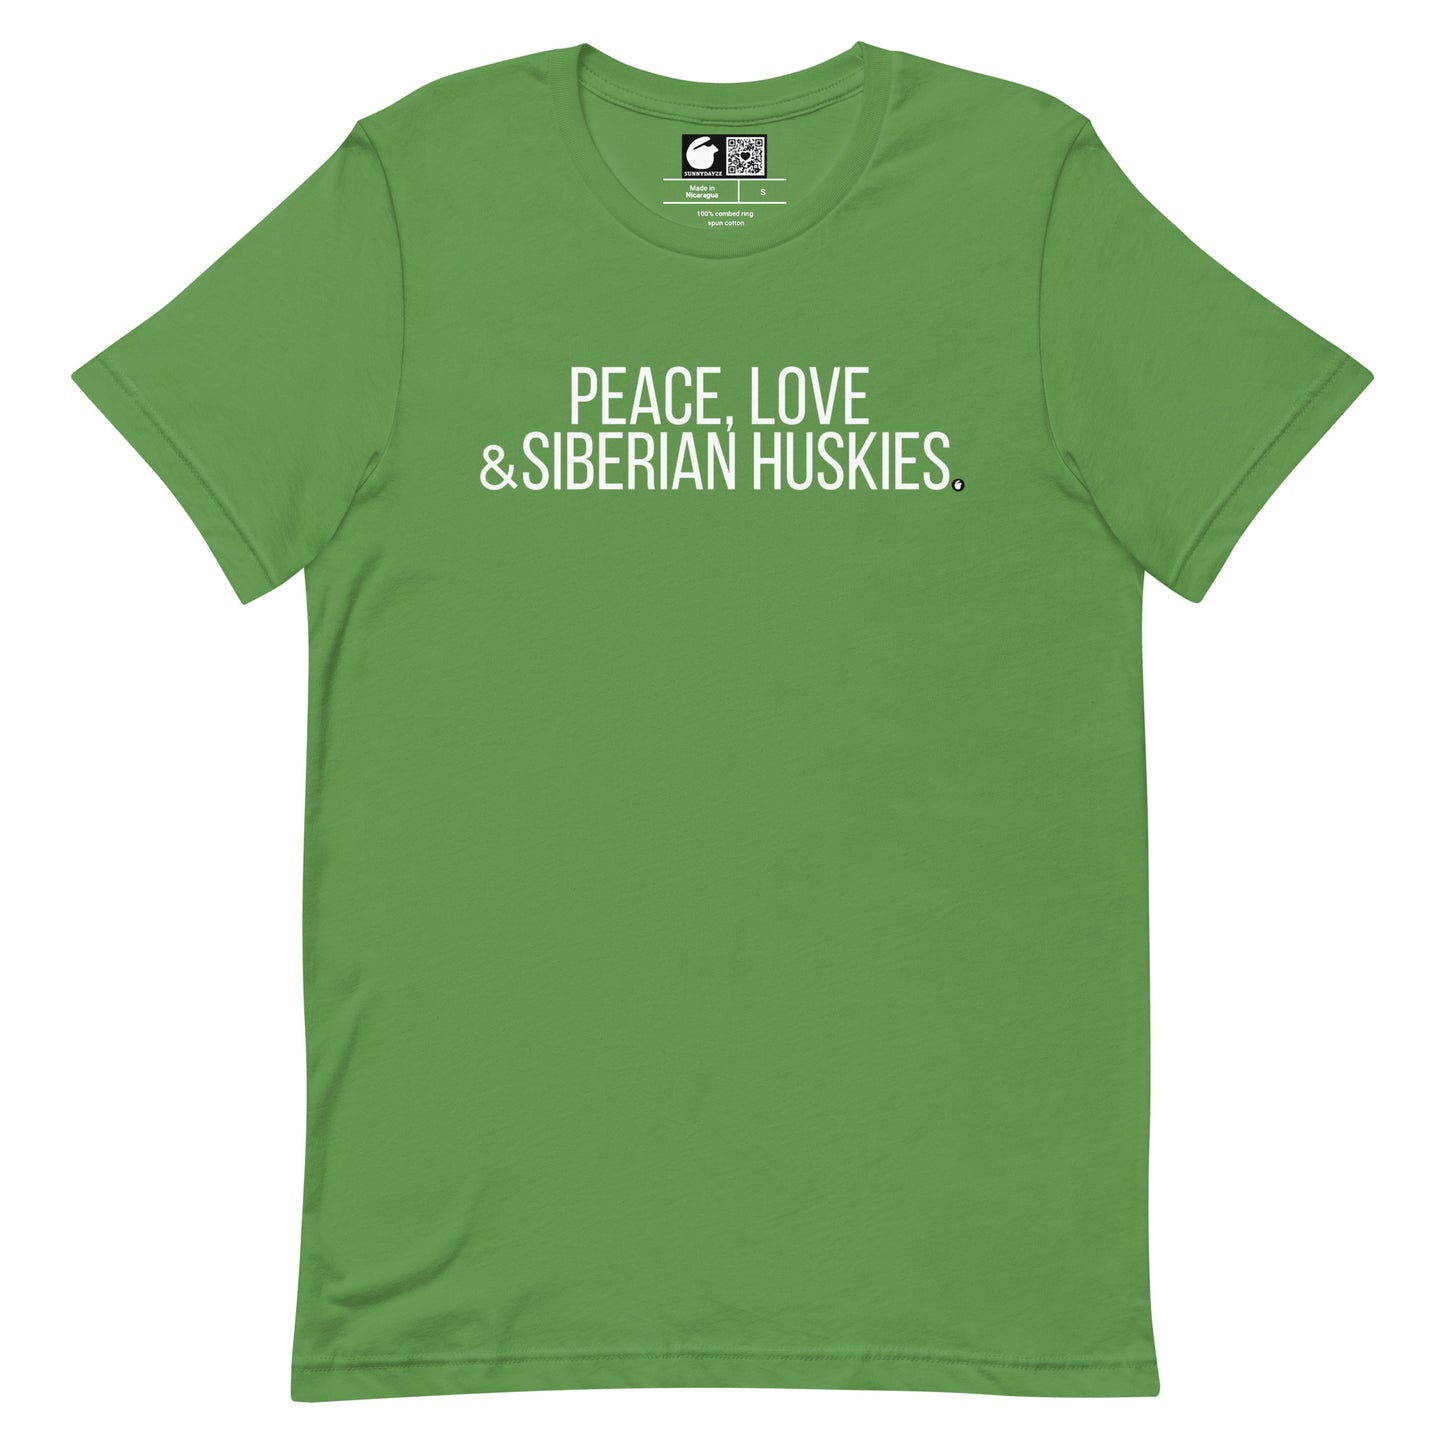 SIBERIAN HUSKIES Short-Sleeve Unisex t-shirt